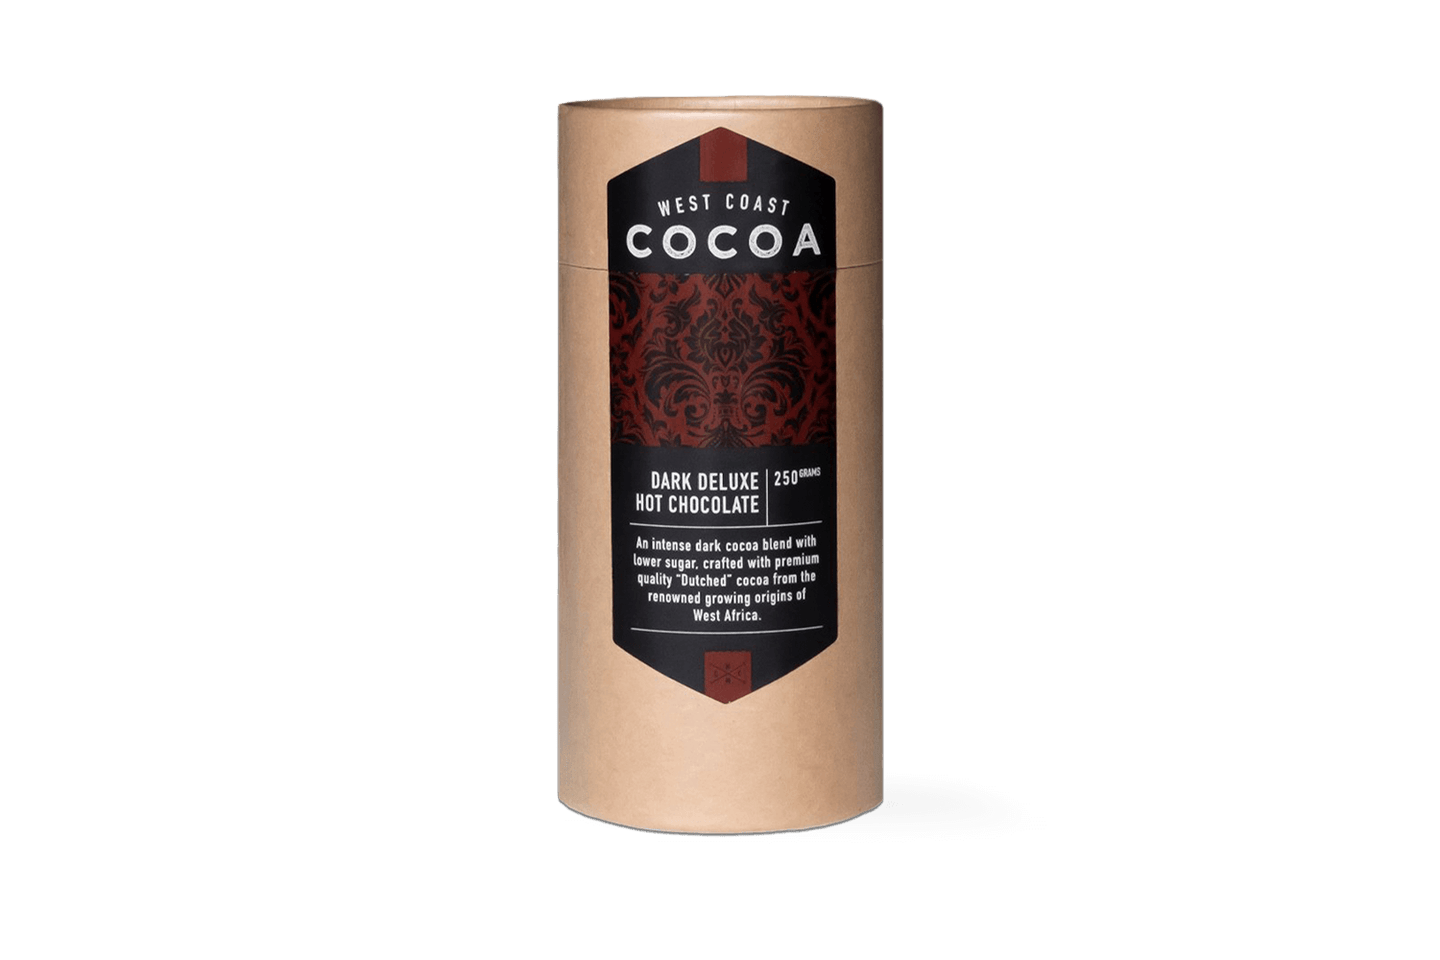 West Coast Cocoa Hot Chocolate Dark Deluxe